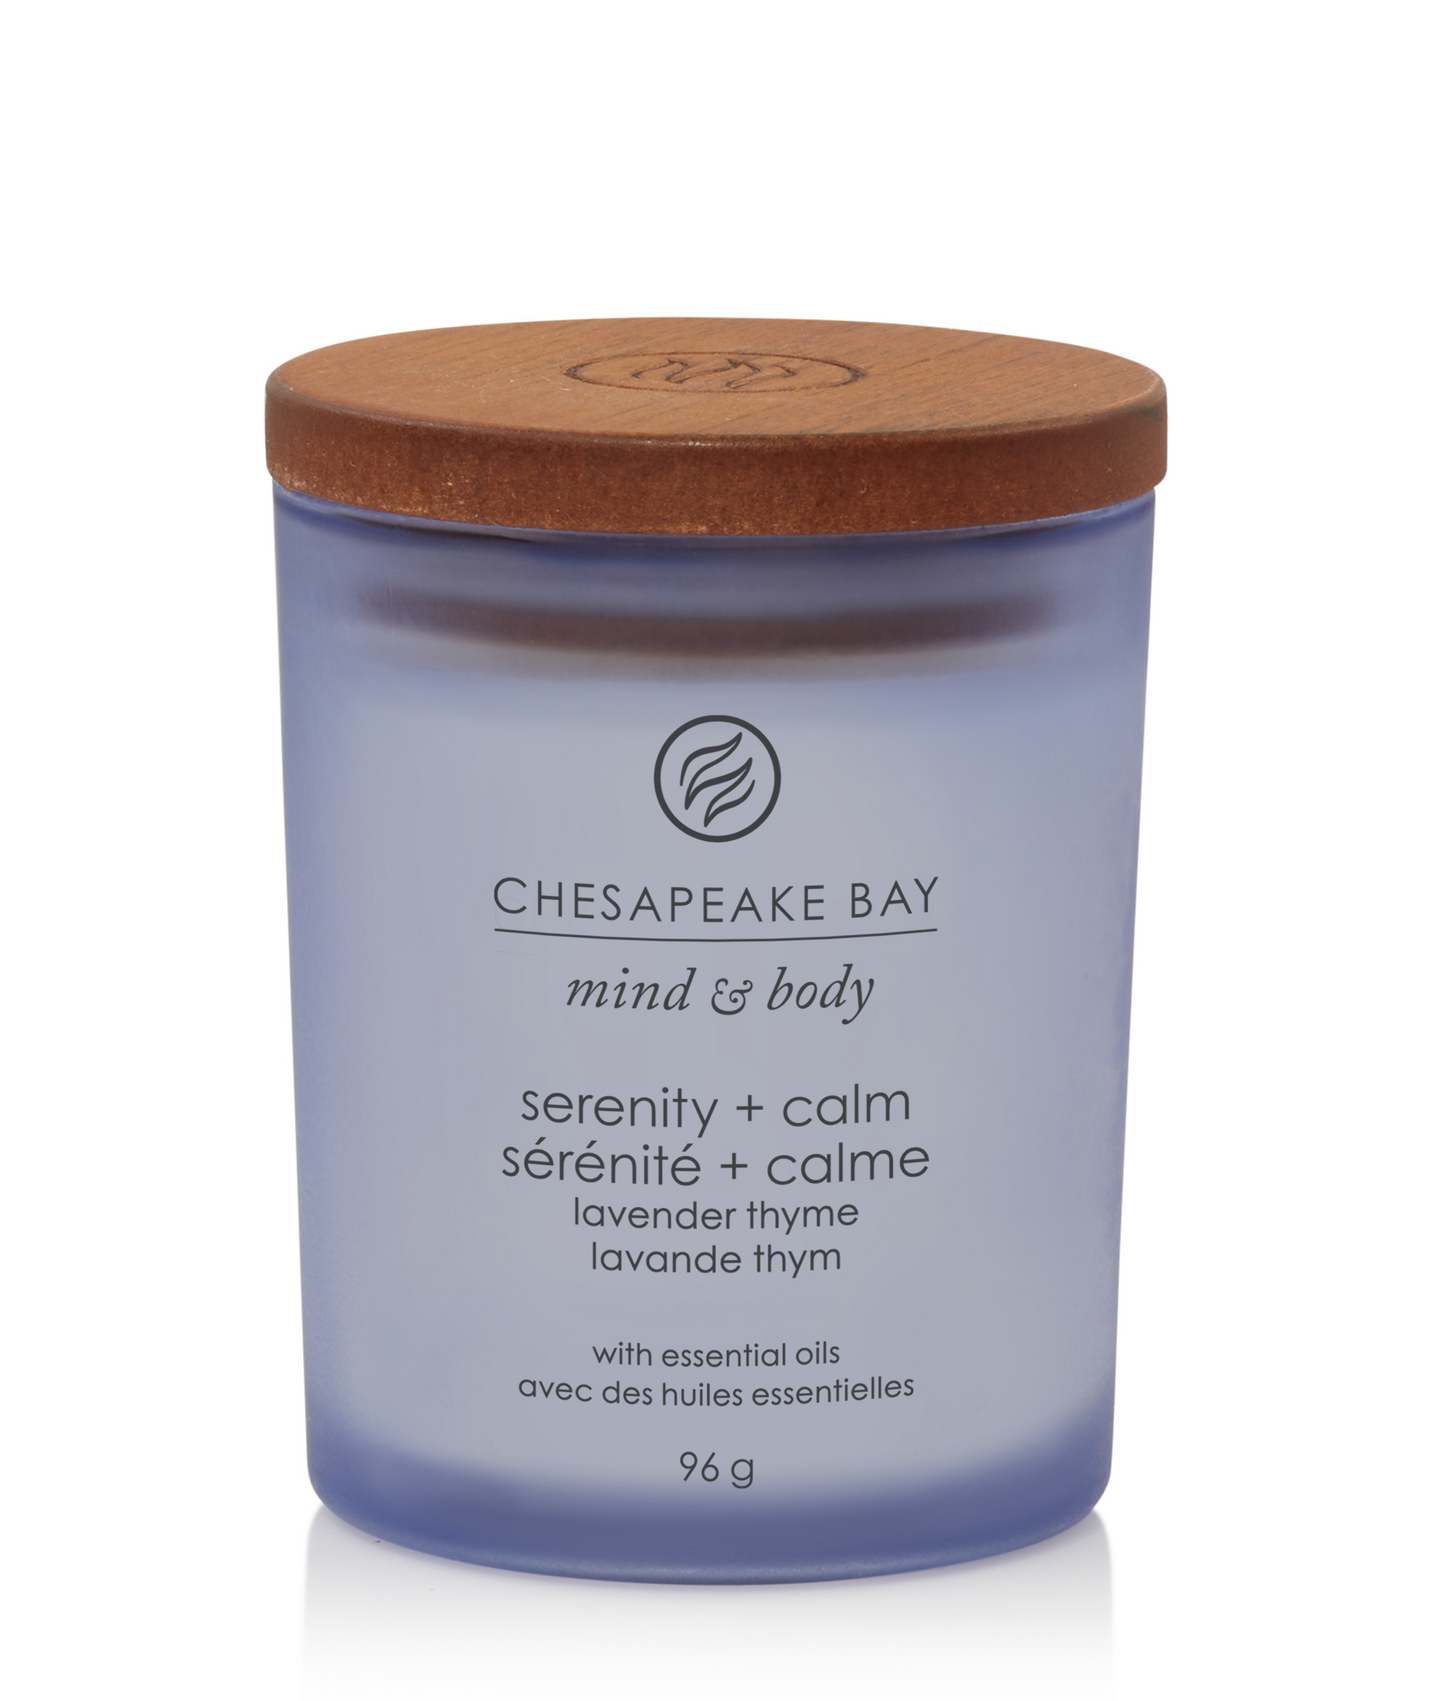 Chesapeake Bay Serenity + Calm tuoksukynttilä S lavender thyme